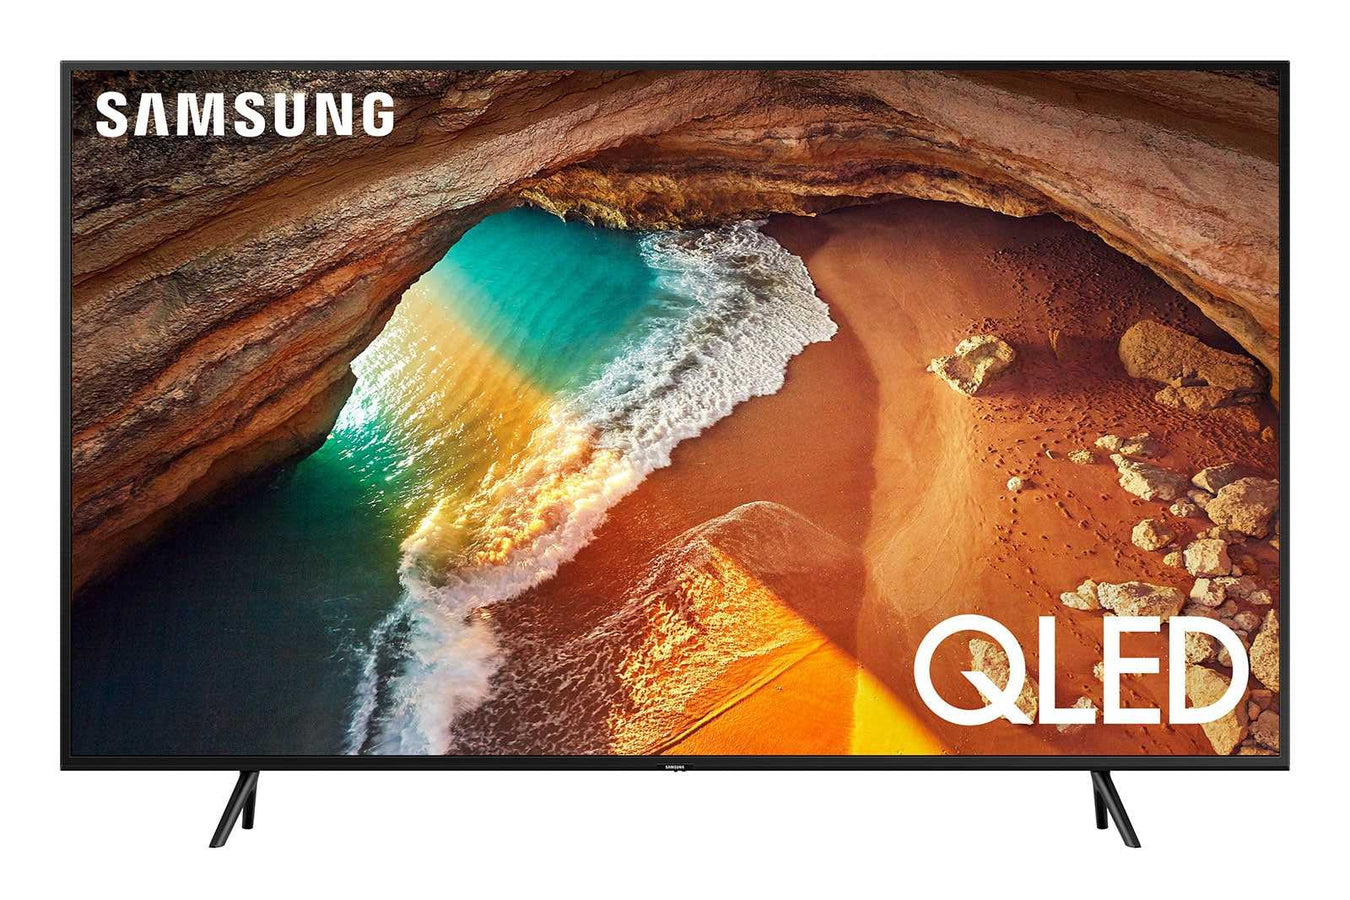 Samsung TVs for sale